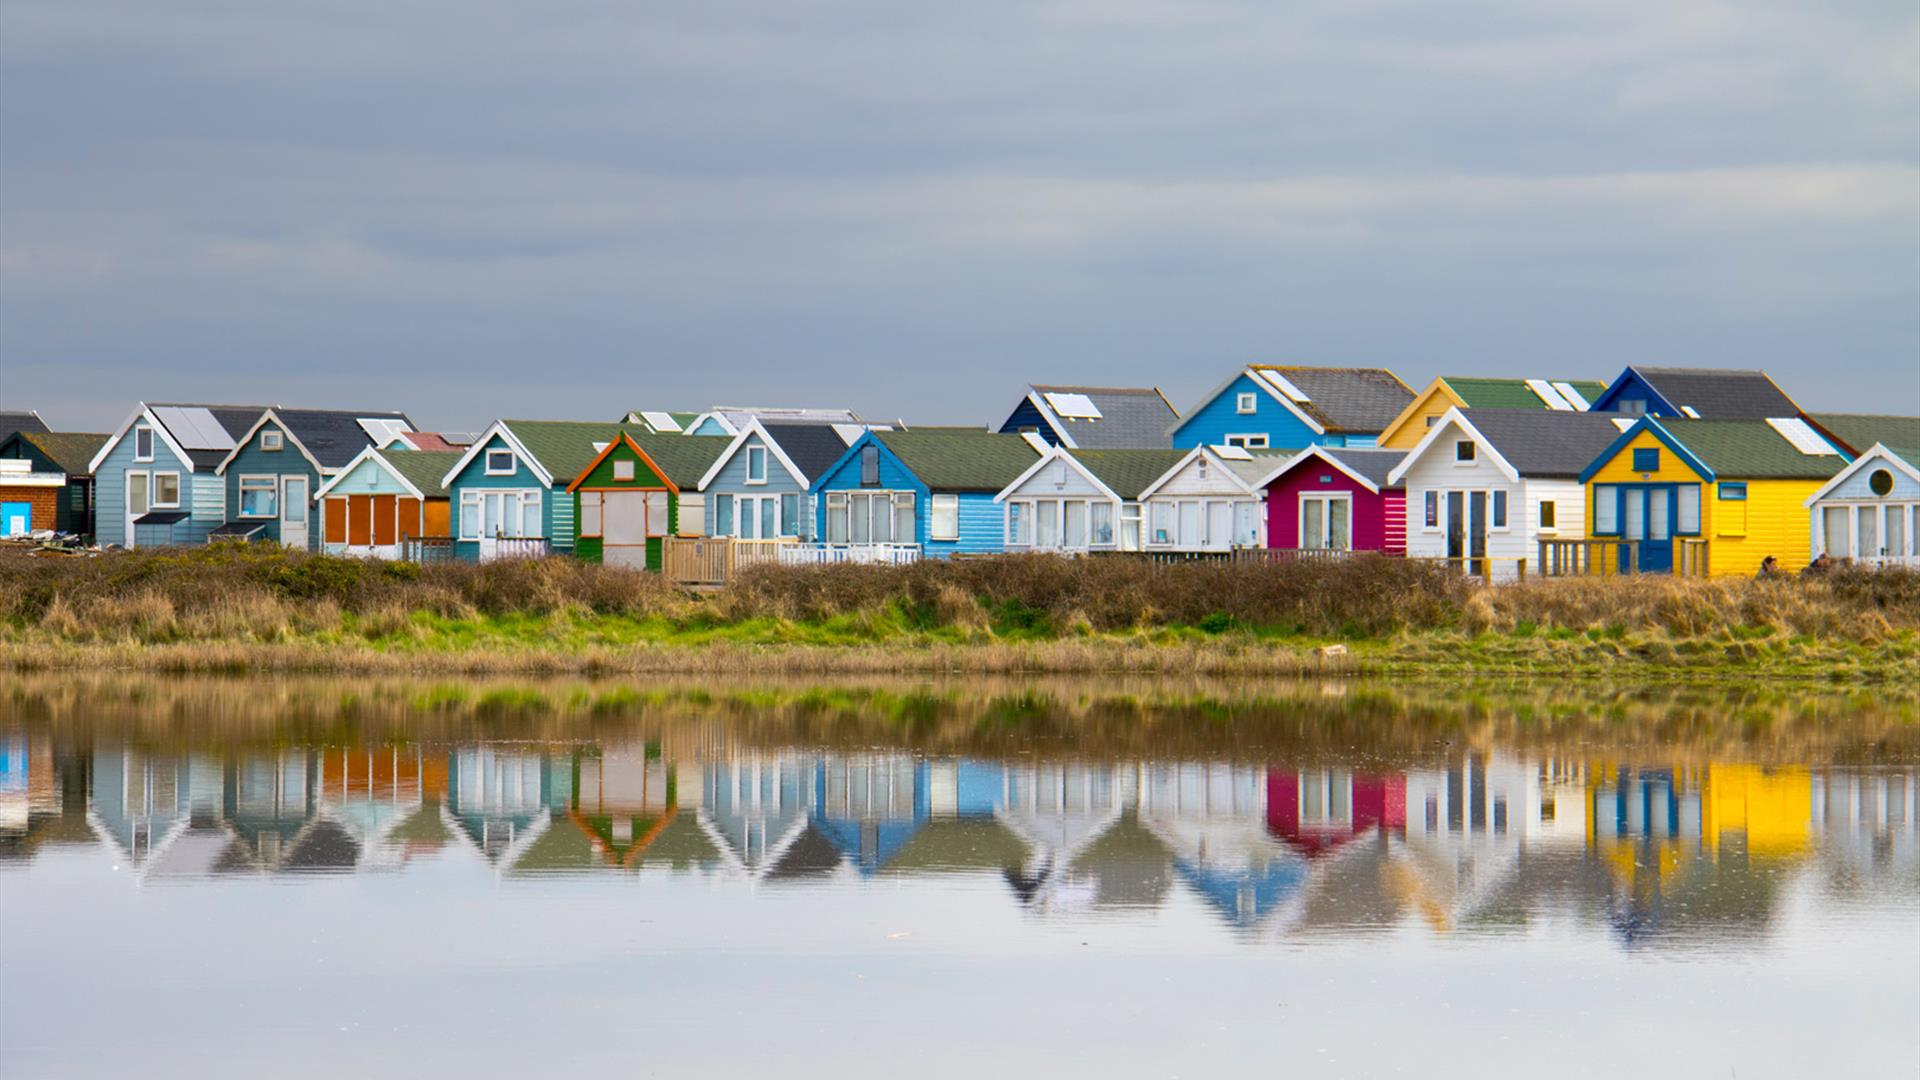 Multi coloured beach huts along mudeford beach and reflection on the calm sea